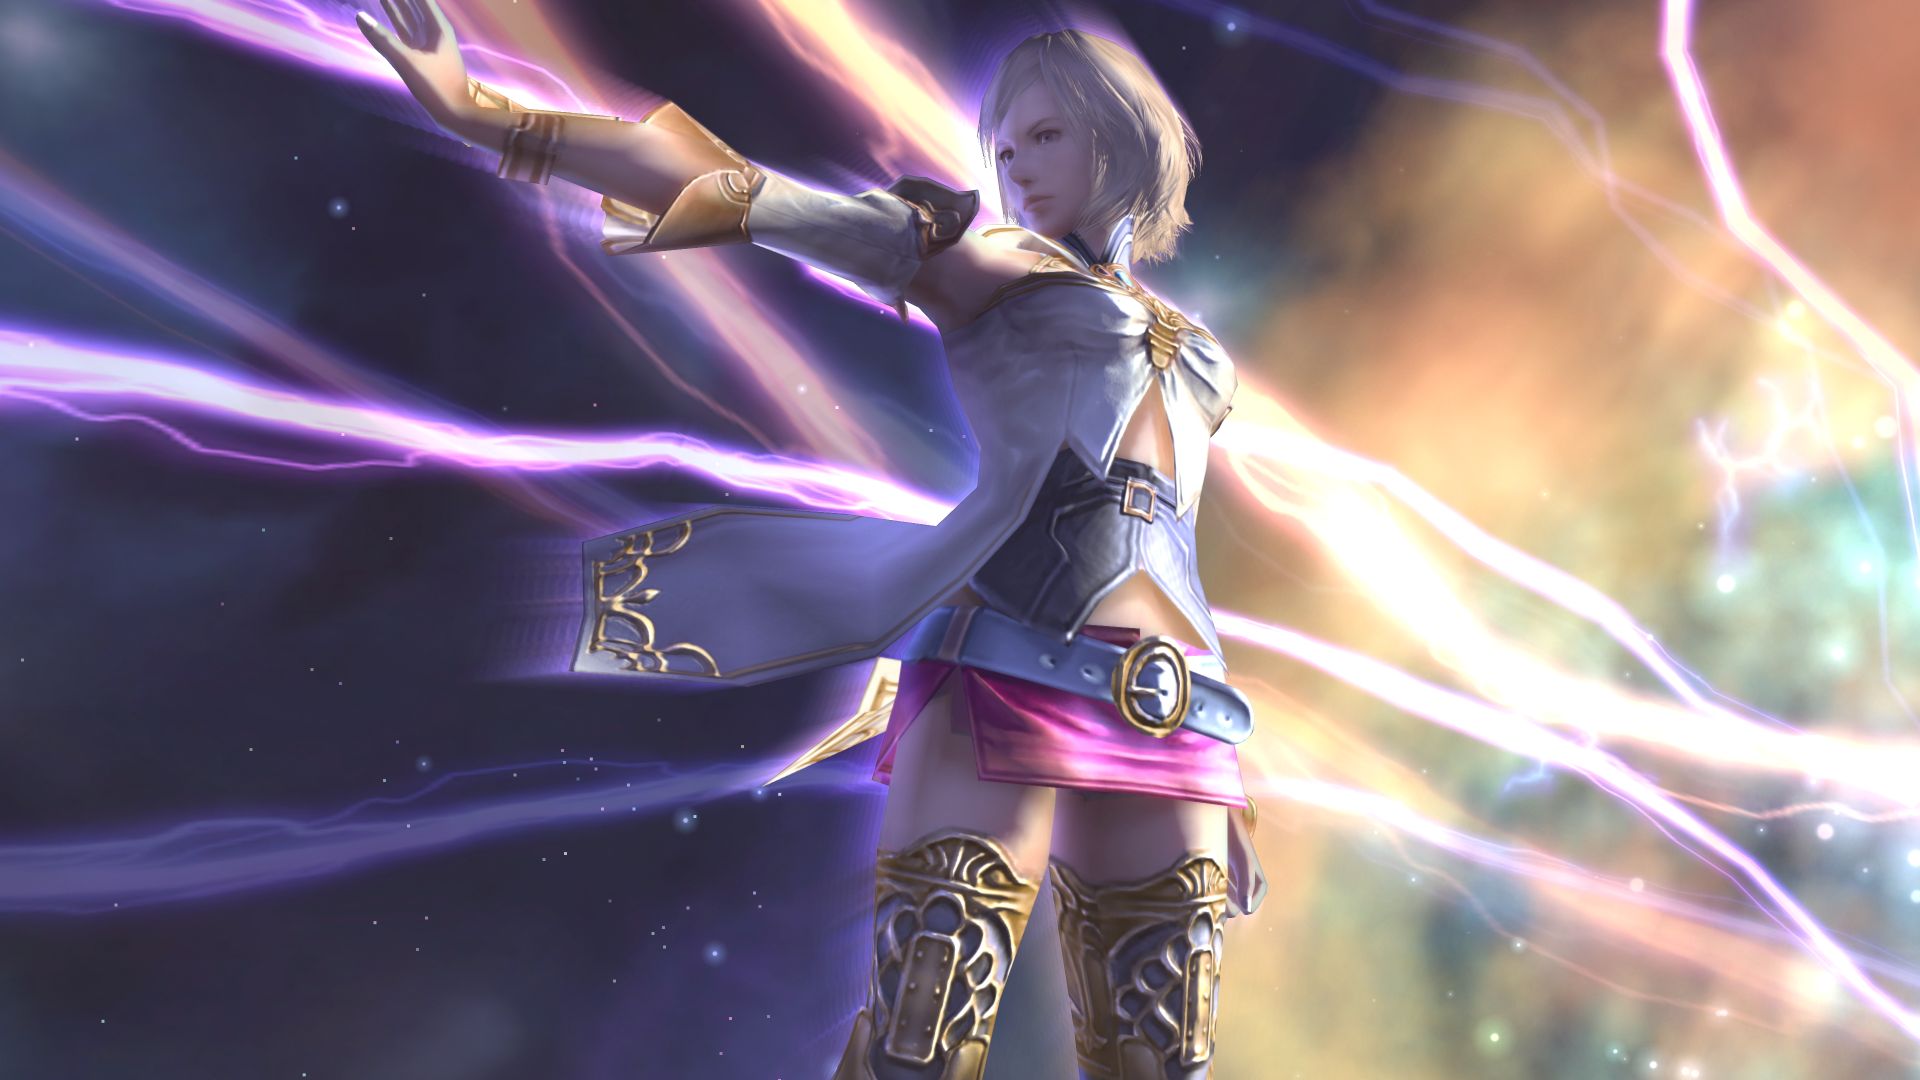 Final Fantasy Xii The Zodiac Age On Steam